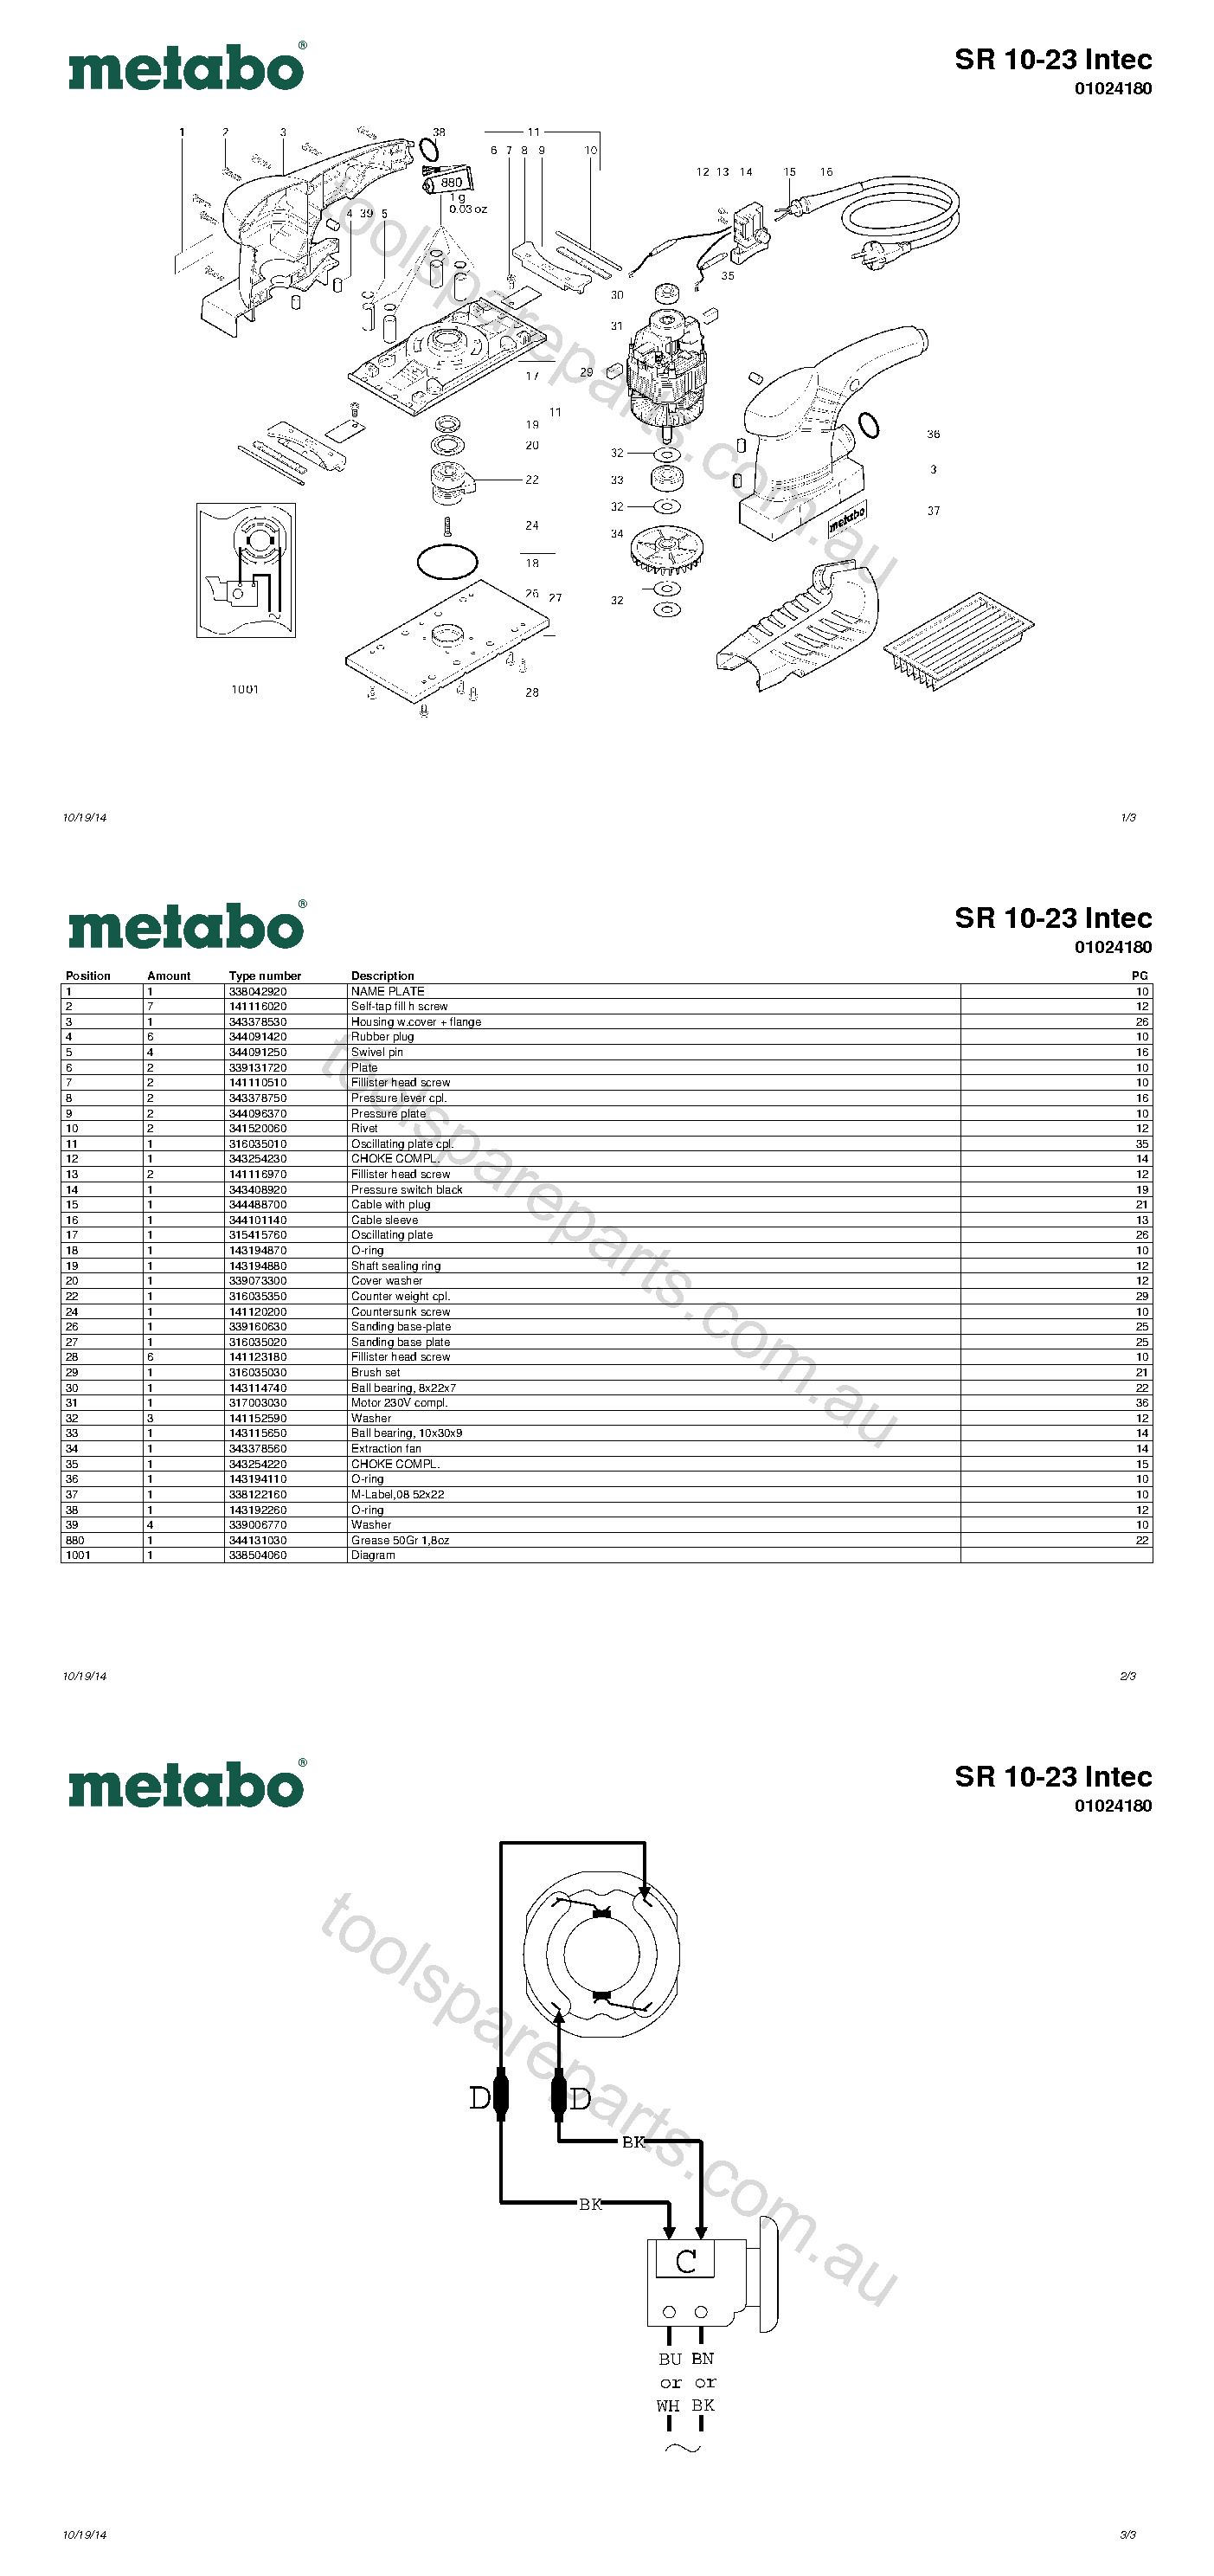 Metabo SR 10-23 Intec 01024180  Diagram 1